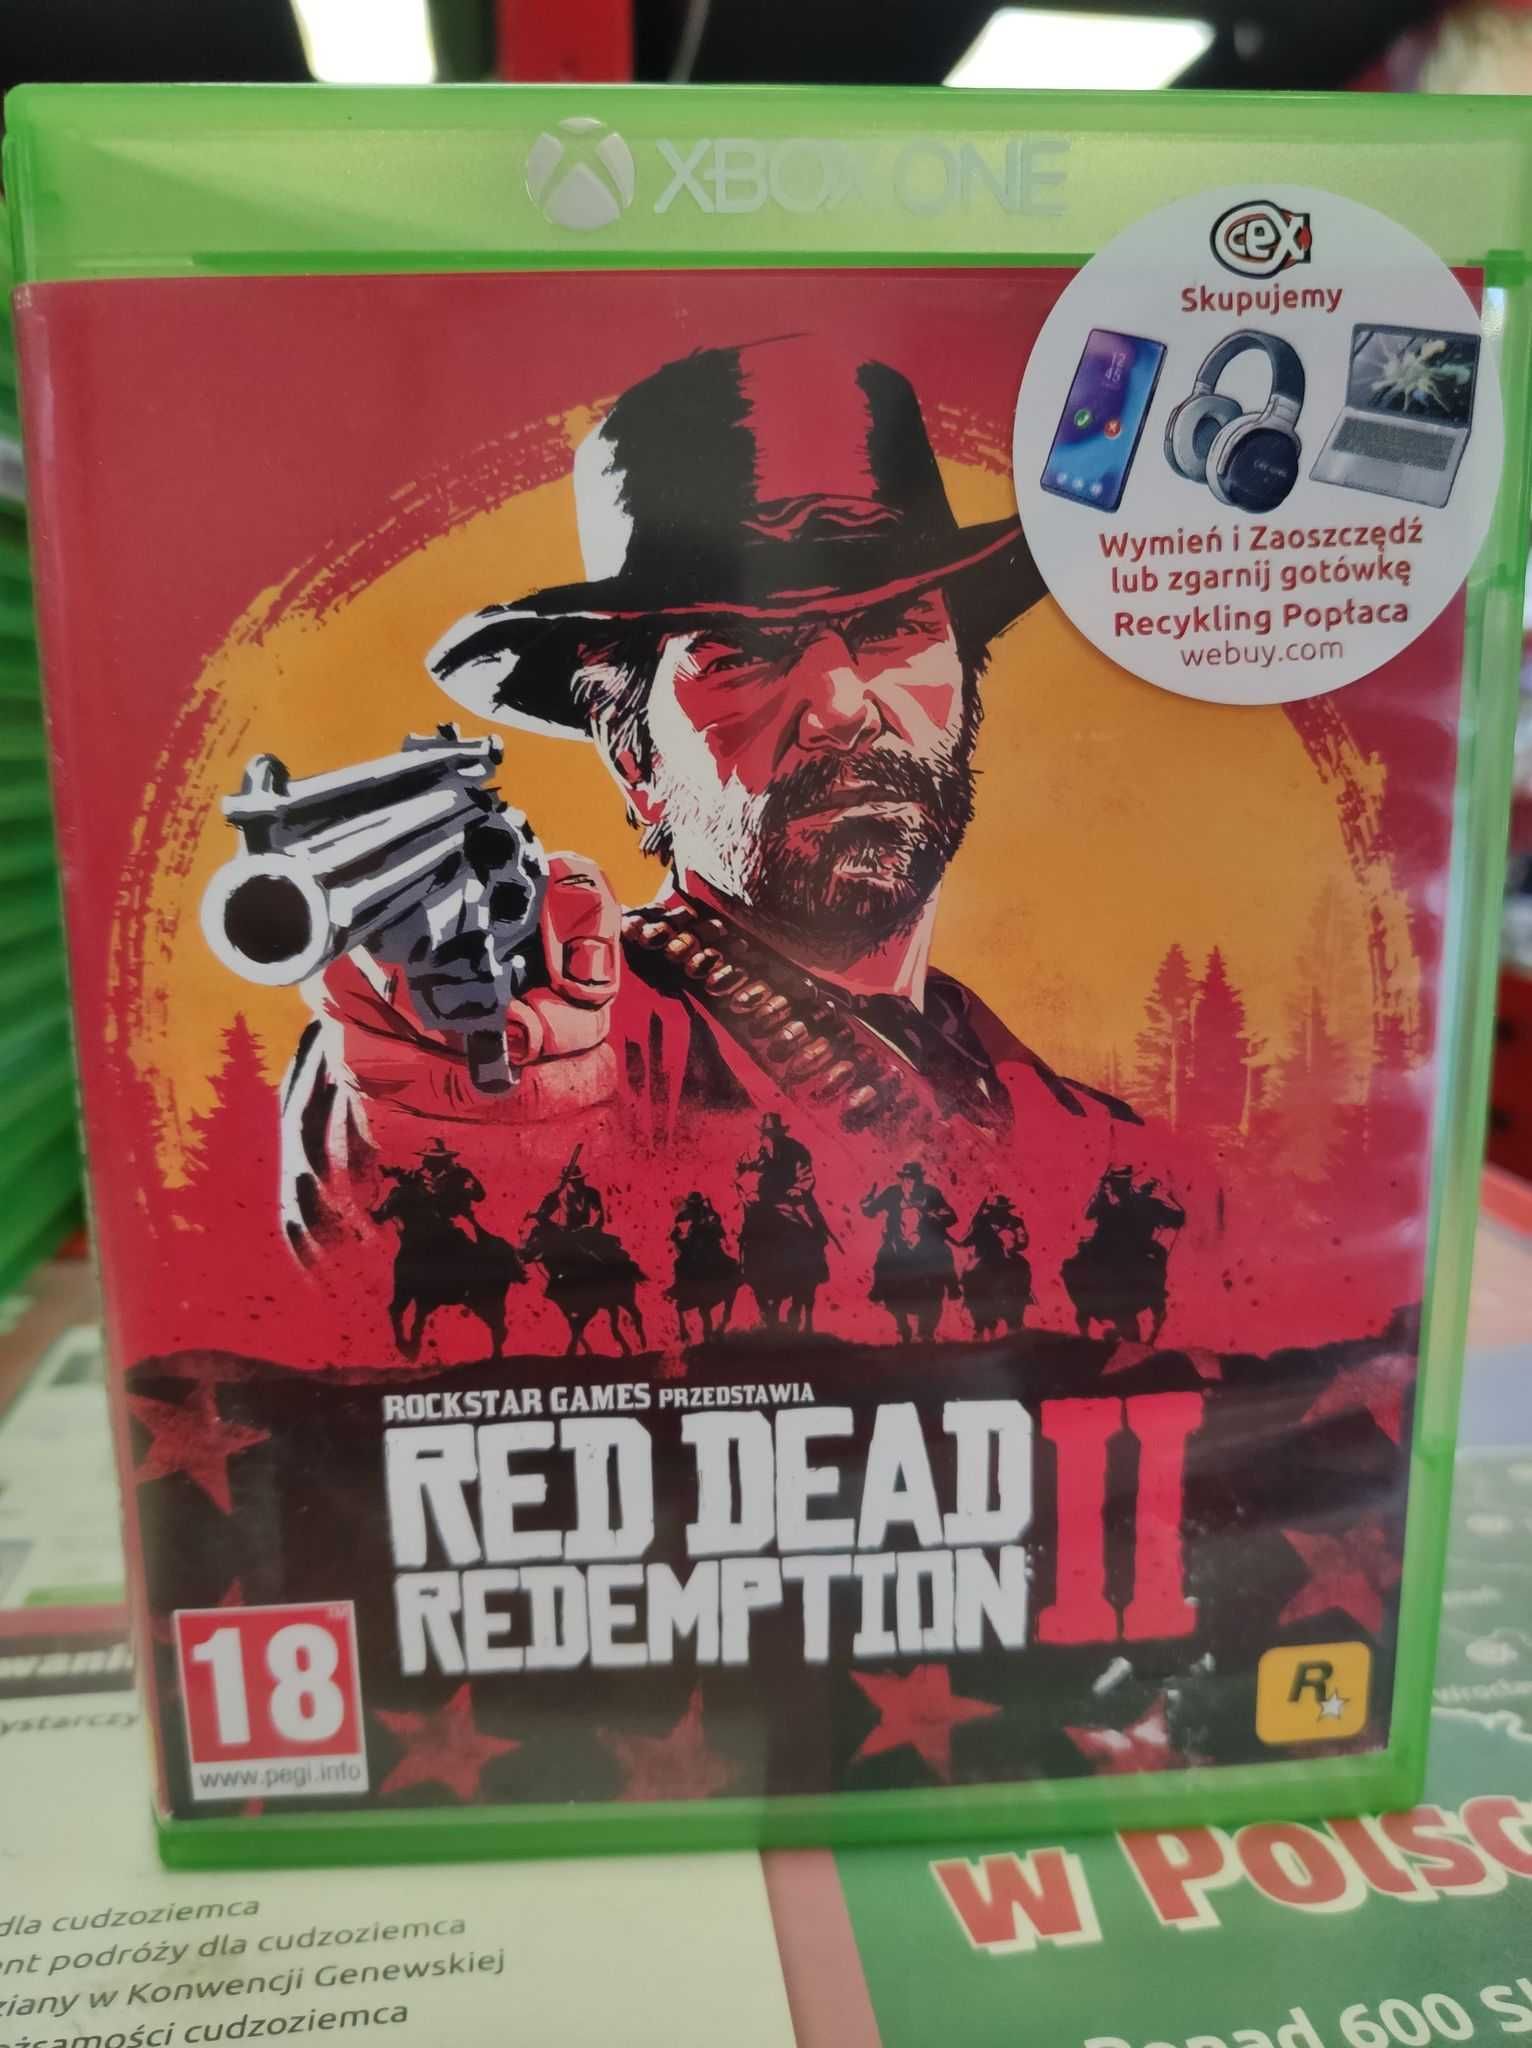 sal borde personal Red Dead Redemption 2 Xbox One Olsztyn • OLX.pl